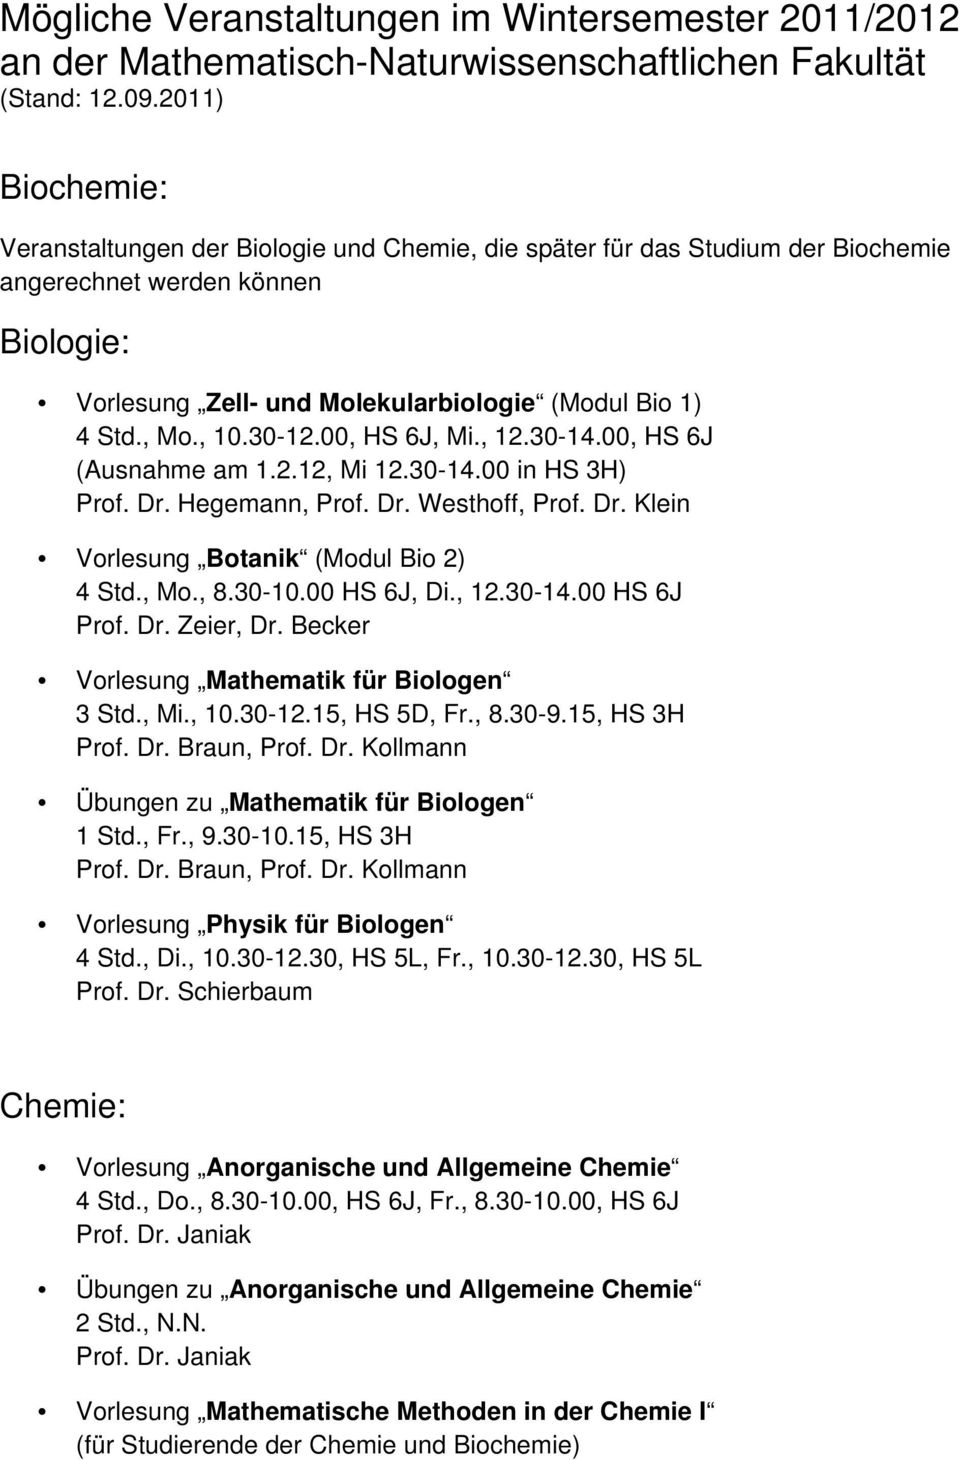 , 10.30-12.00, HS 6J, Mi., 12.30-14.00, HS 6J (Ausnahme am 1.2.12, Mi 12.30-14.00 in HS 3H) Prof. Dr. Hegemann, Prof. Dr. Westhoff, Prof. Dr. Klein Vorlesung Botanik (Modul Bio 2) 4 Std., Mo., 8.